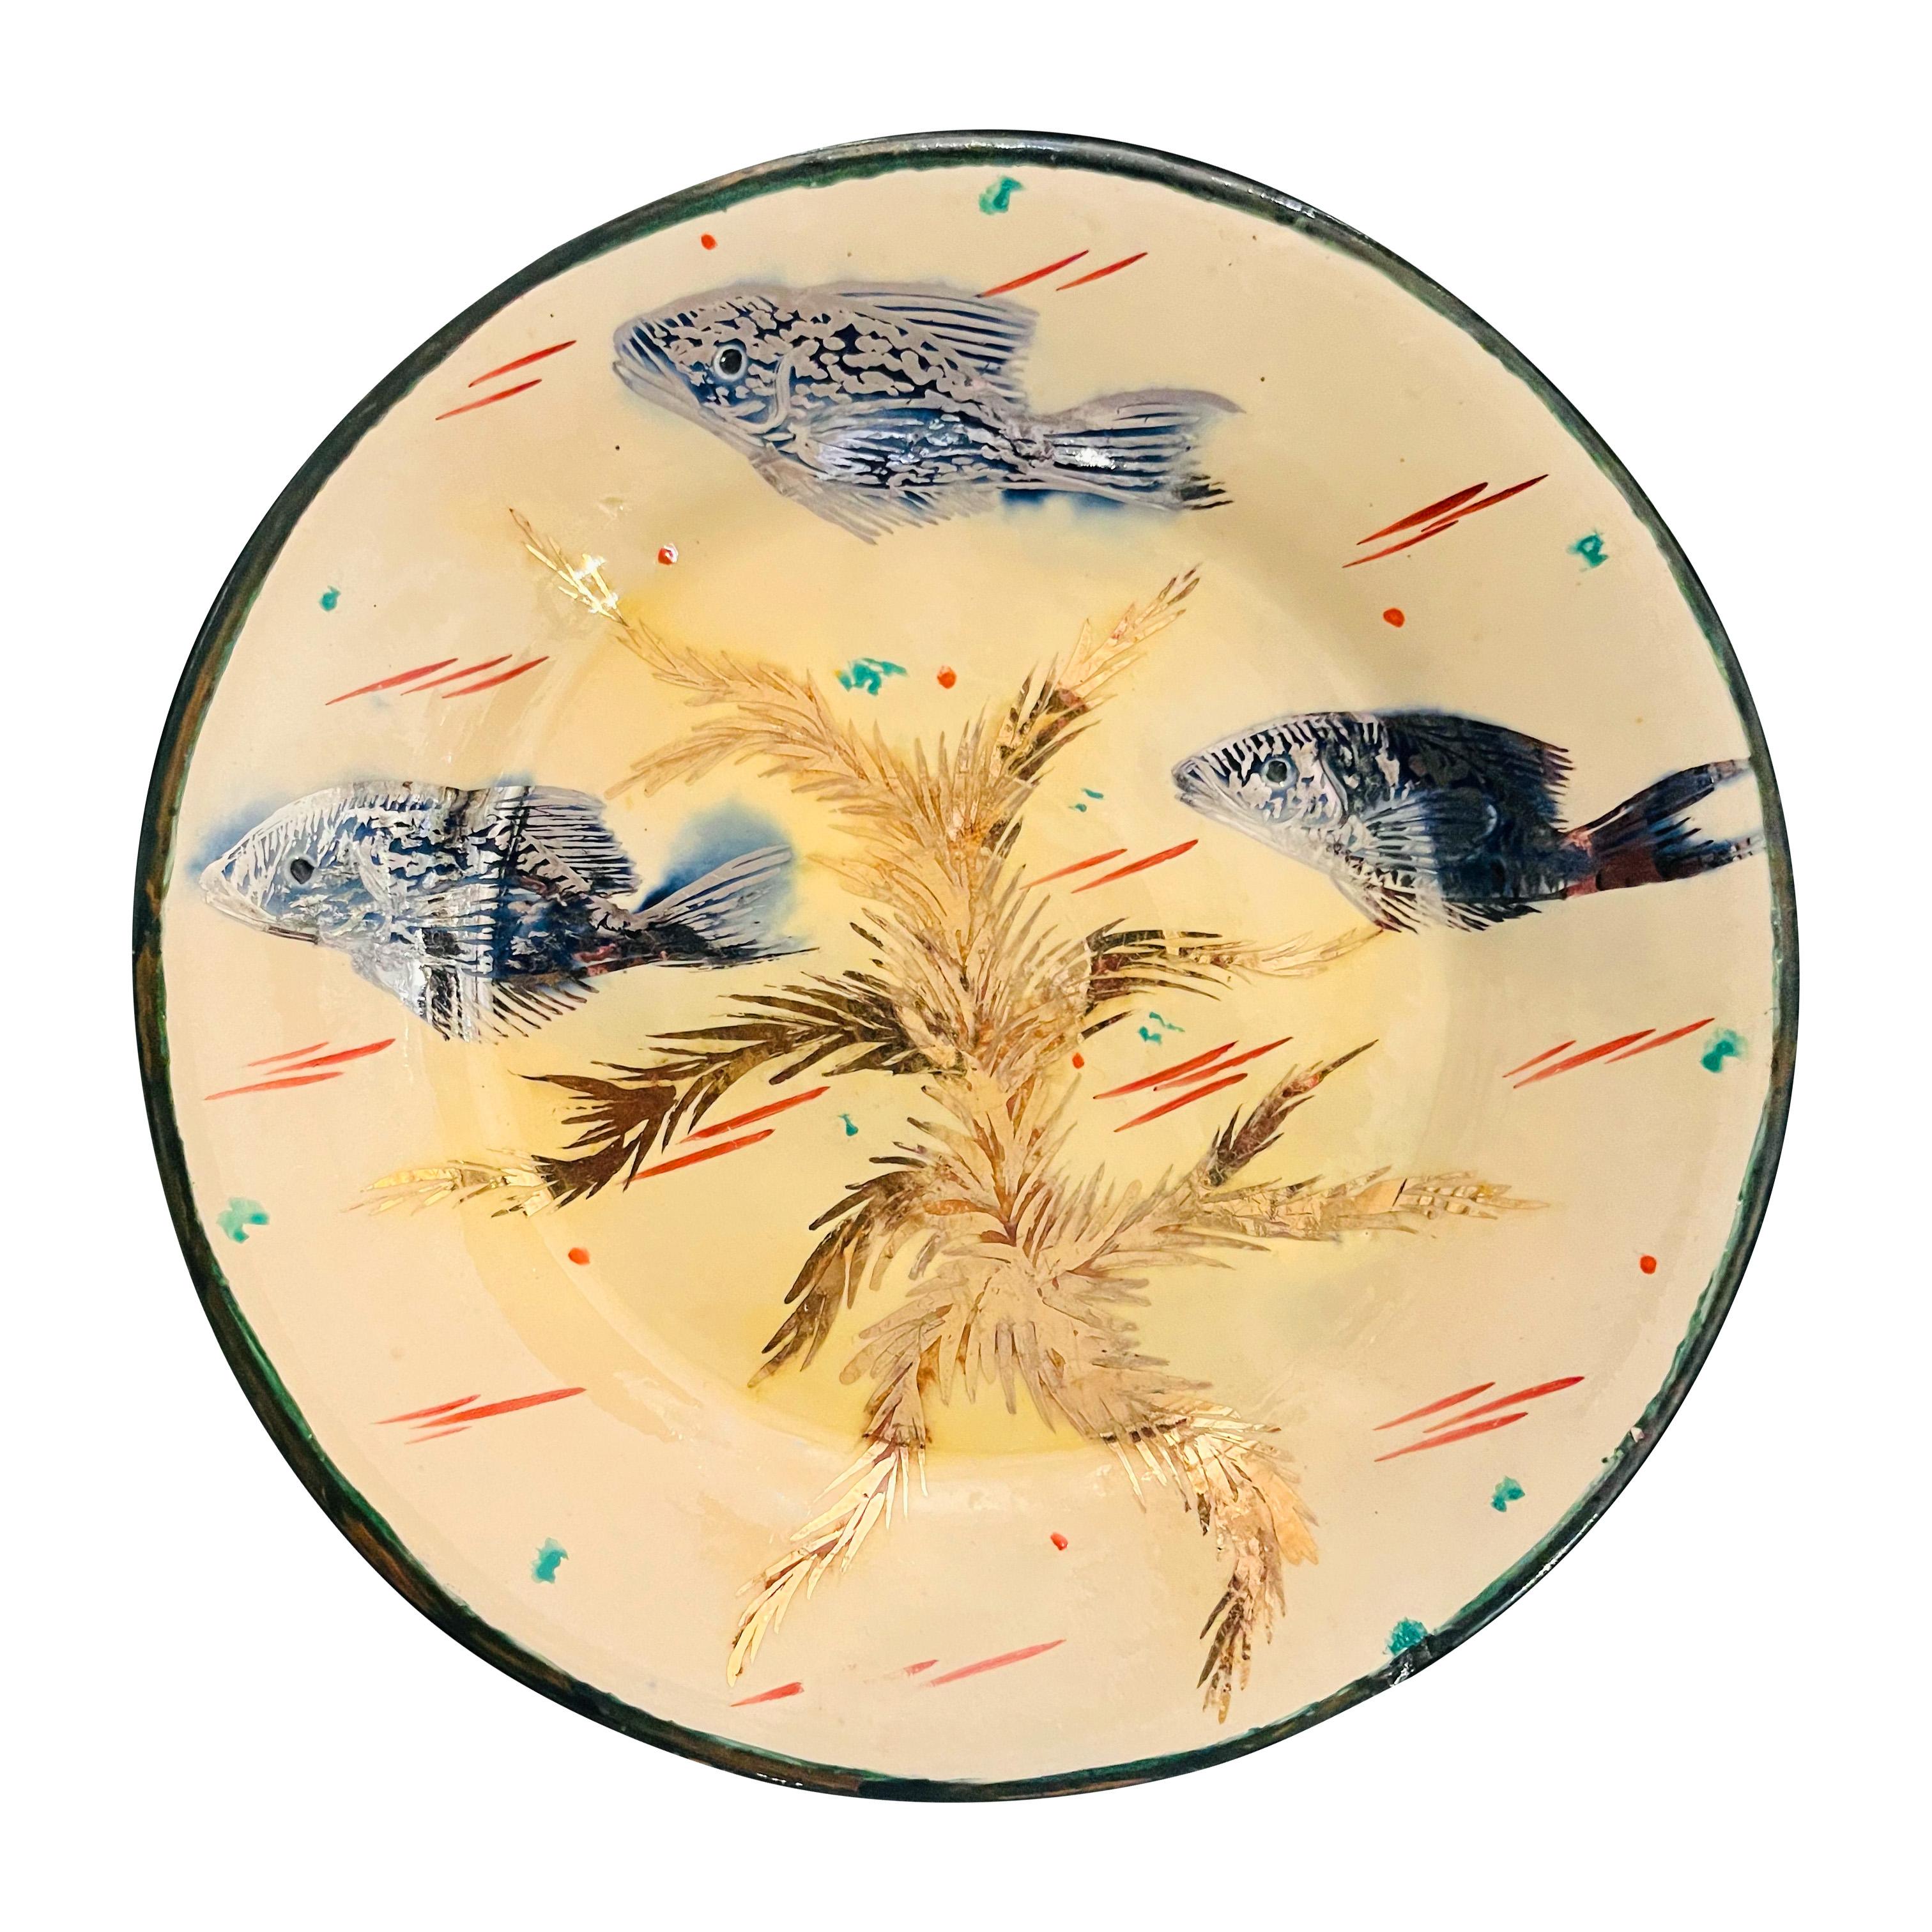 Spanish Diaz-Costa famous catalan artist, Ceramic handpainted dessert plate, circa 1960 For Sale